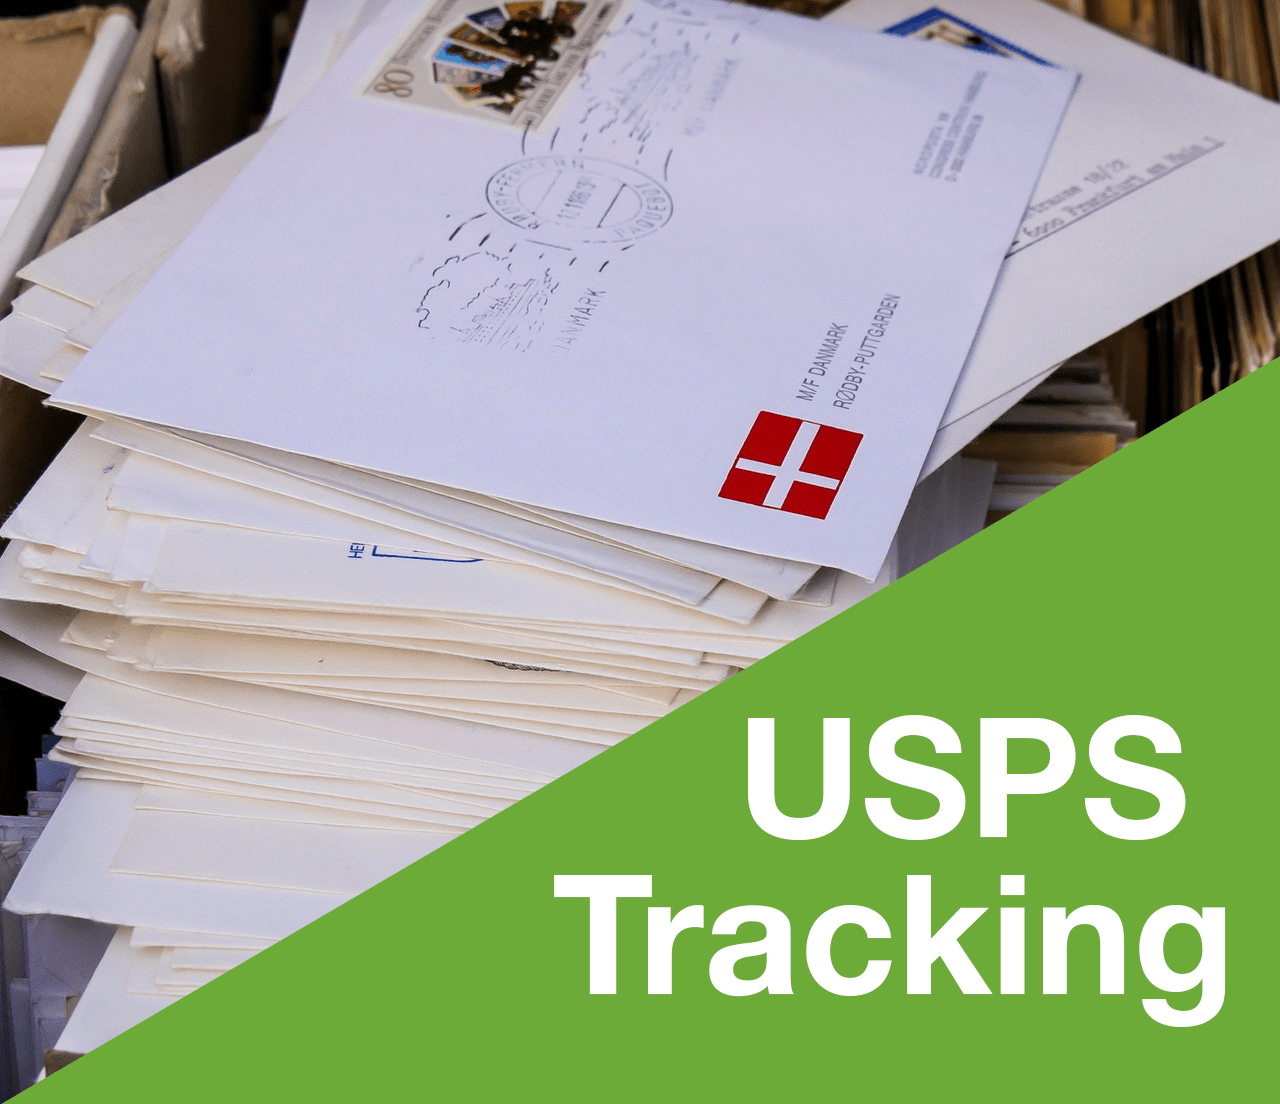 USPS tracking. Usps track